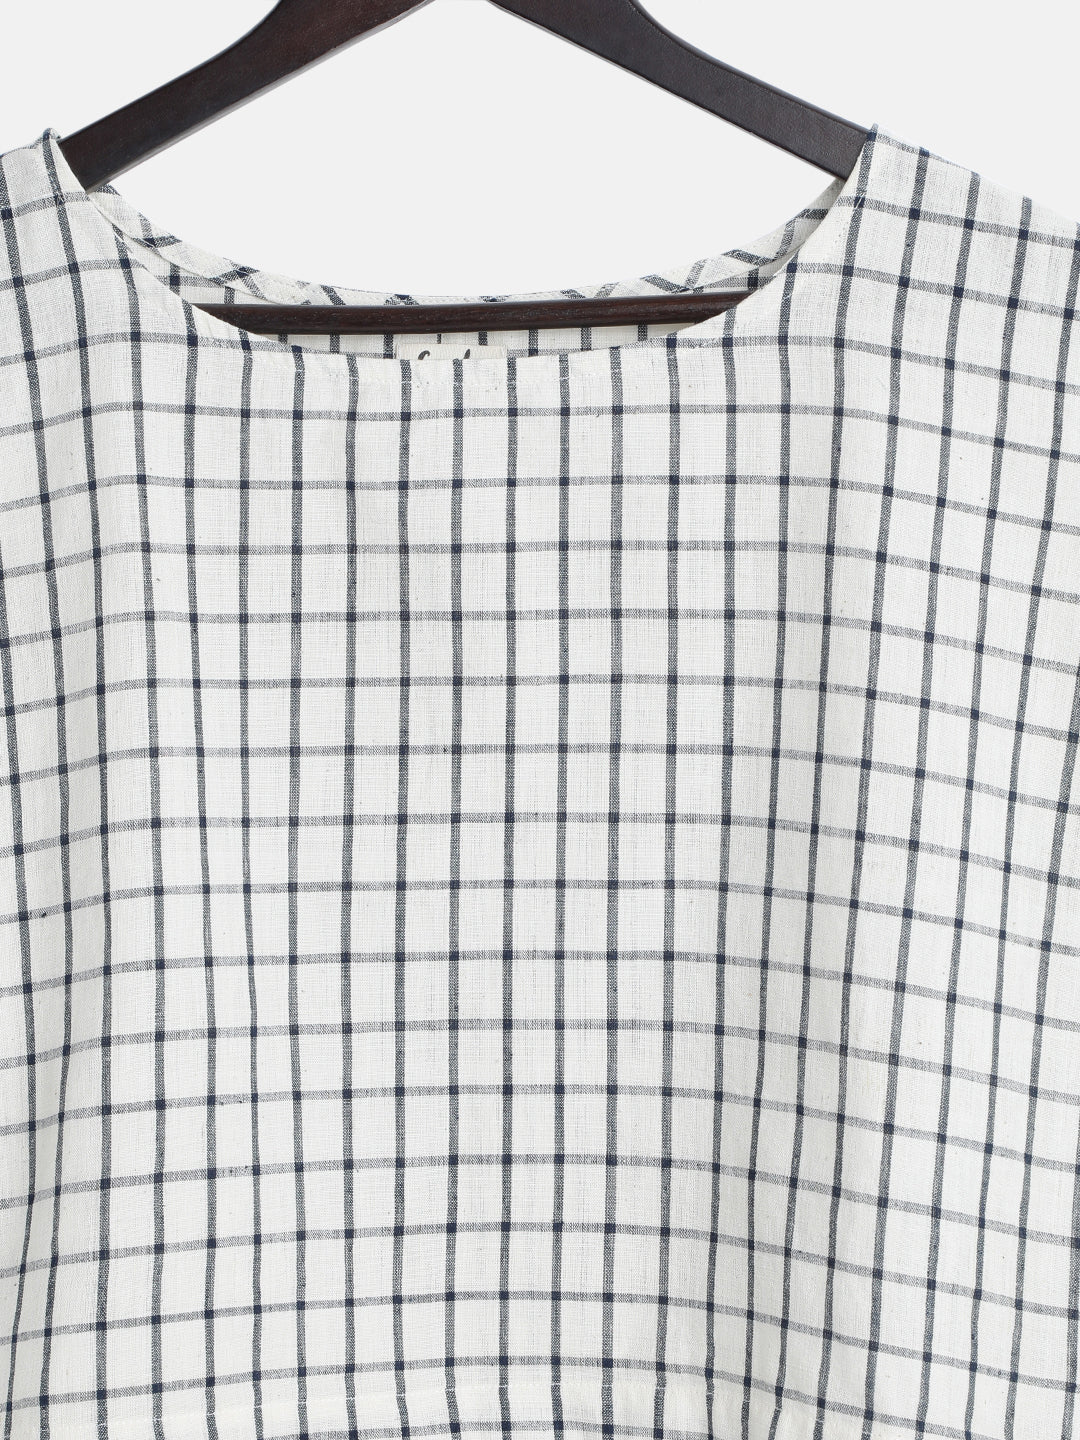 Women's Cotton Top Blue Checks - Closeup  Image 